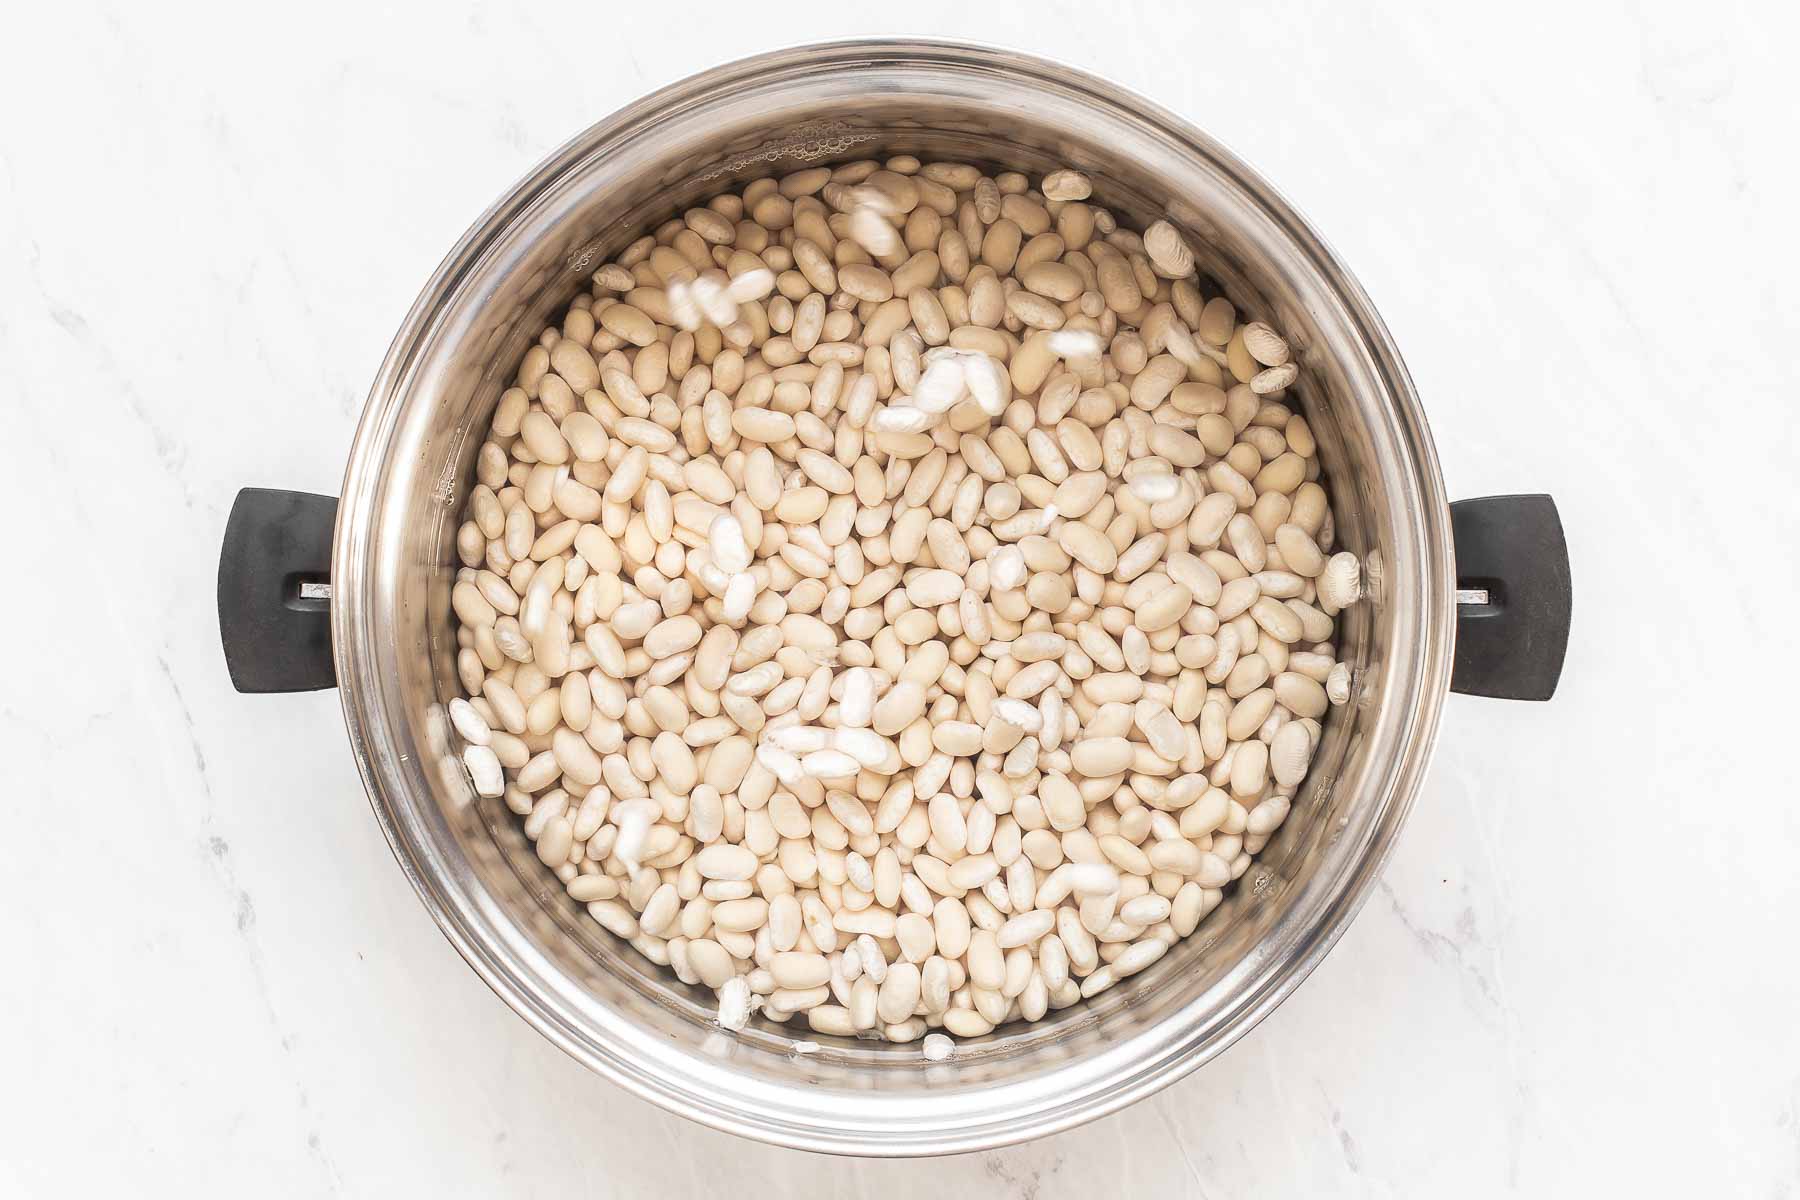 White beans soaking in water in pan.